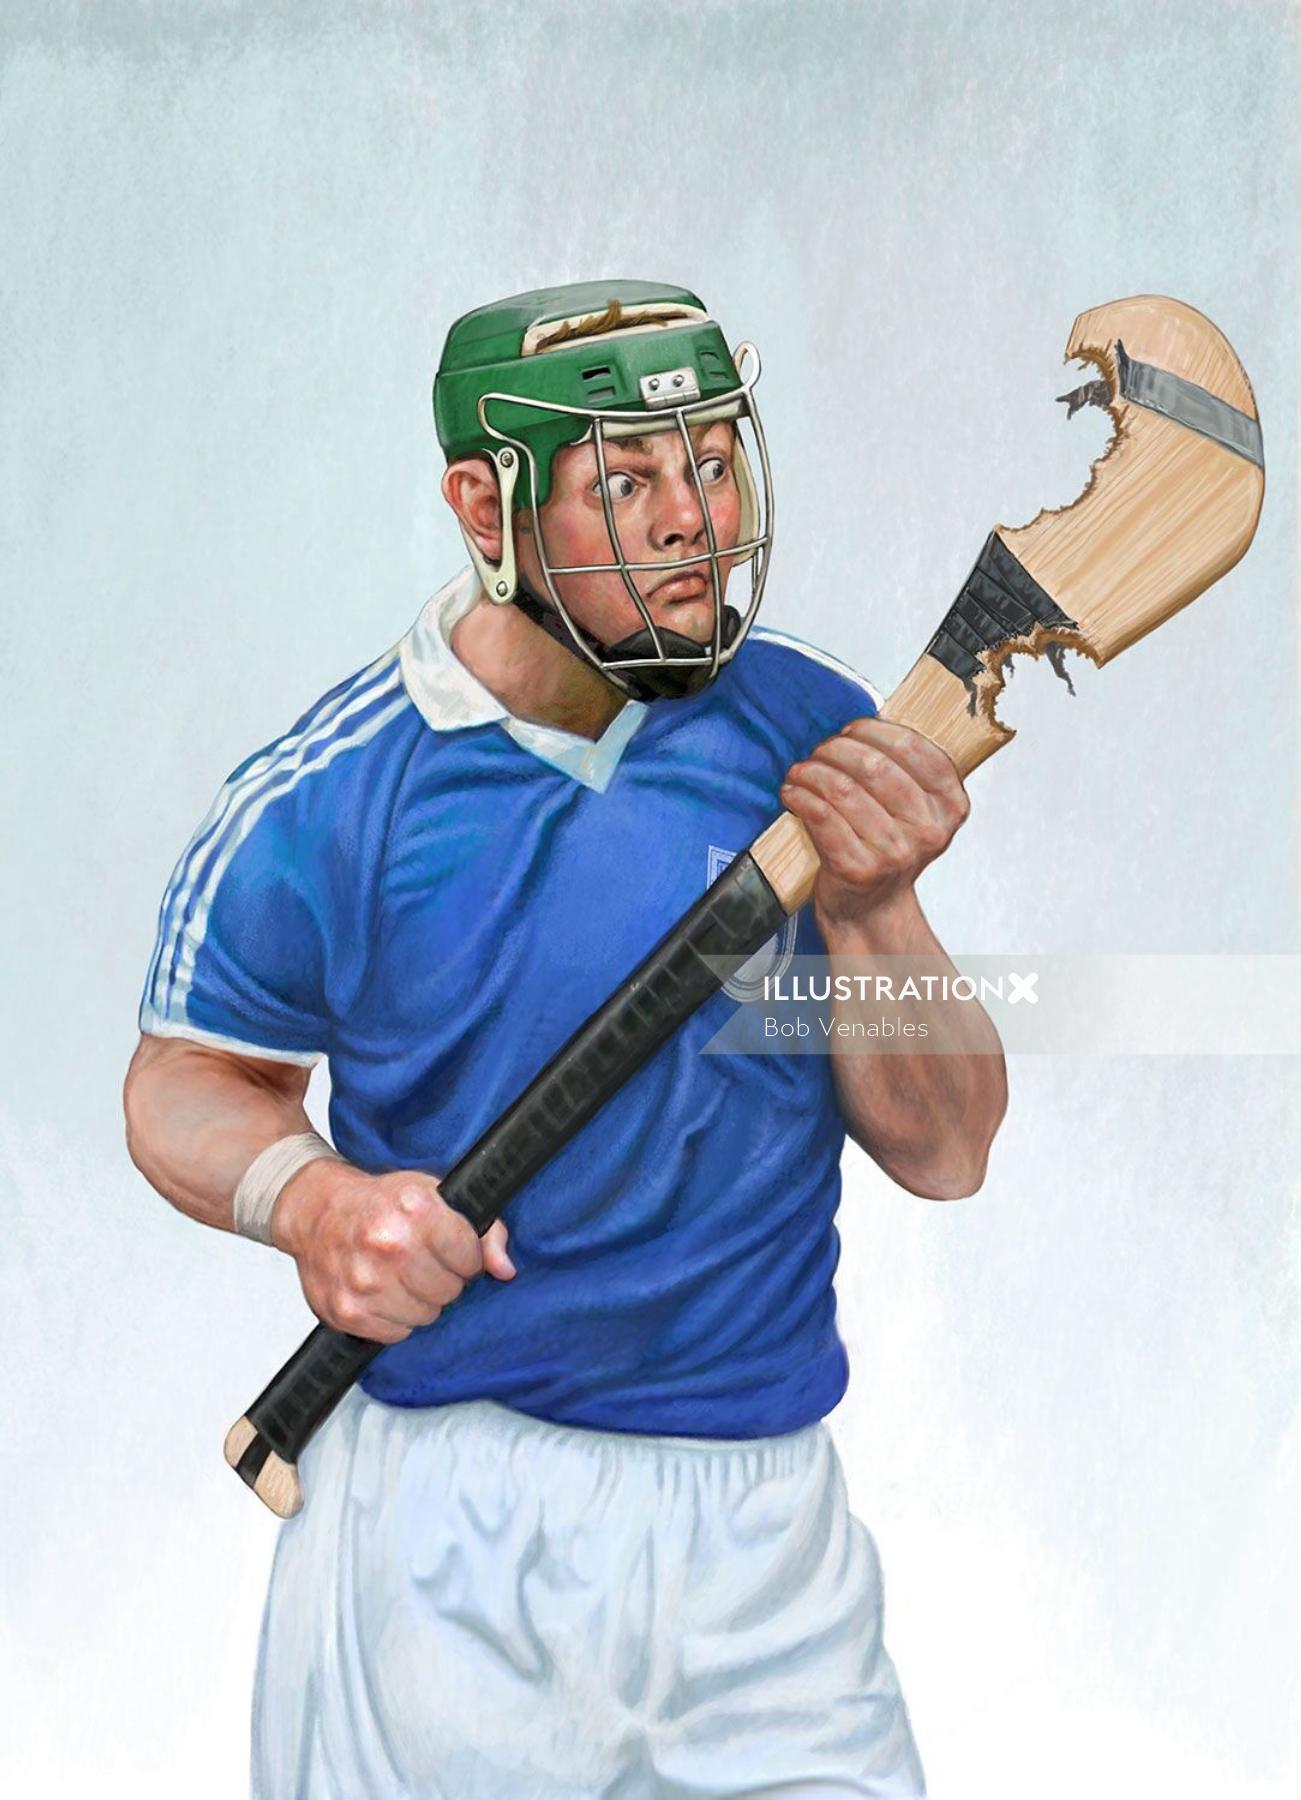 Hurling sport player poster art for The Irish Examiner newspaper